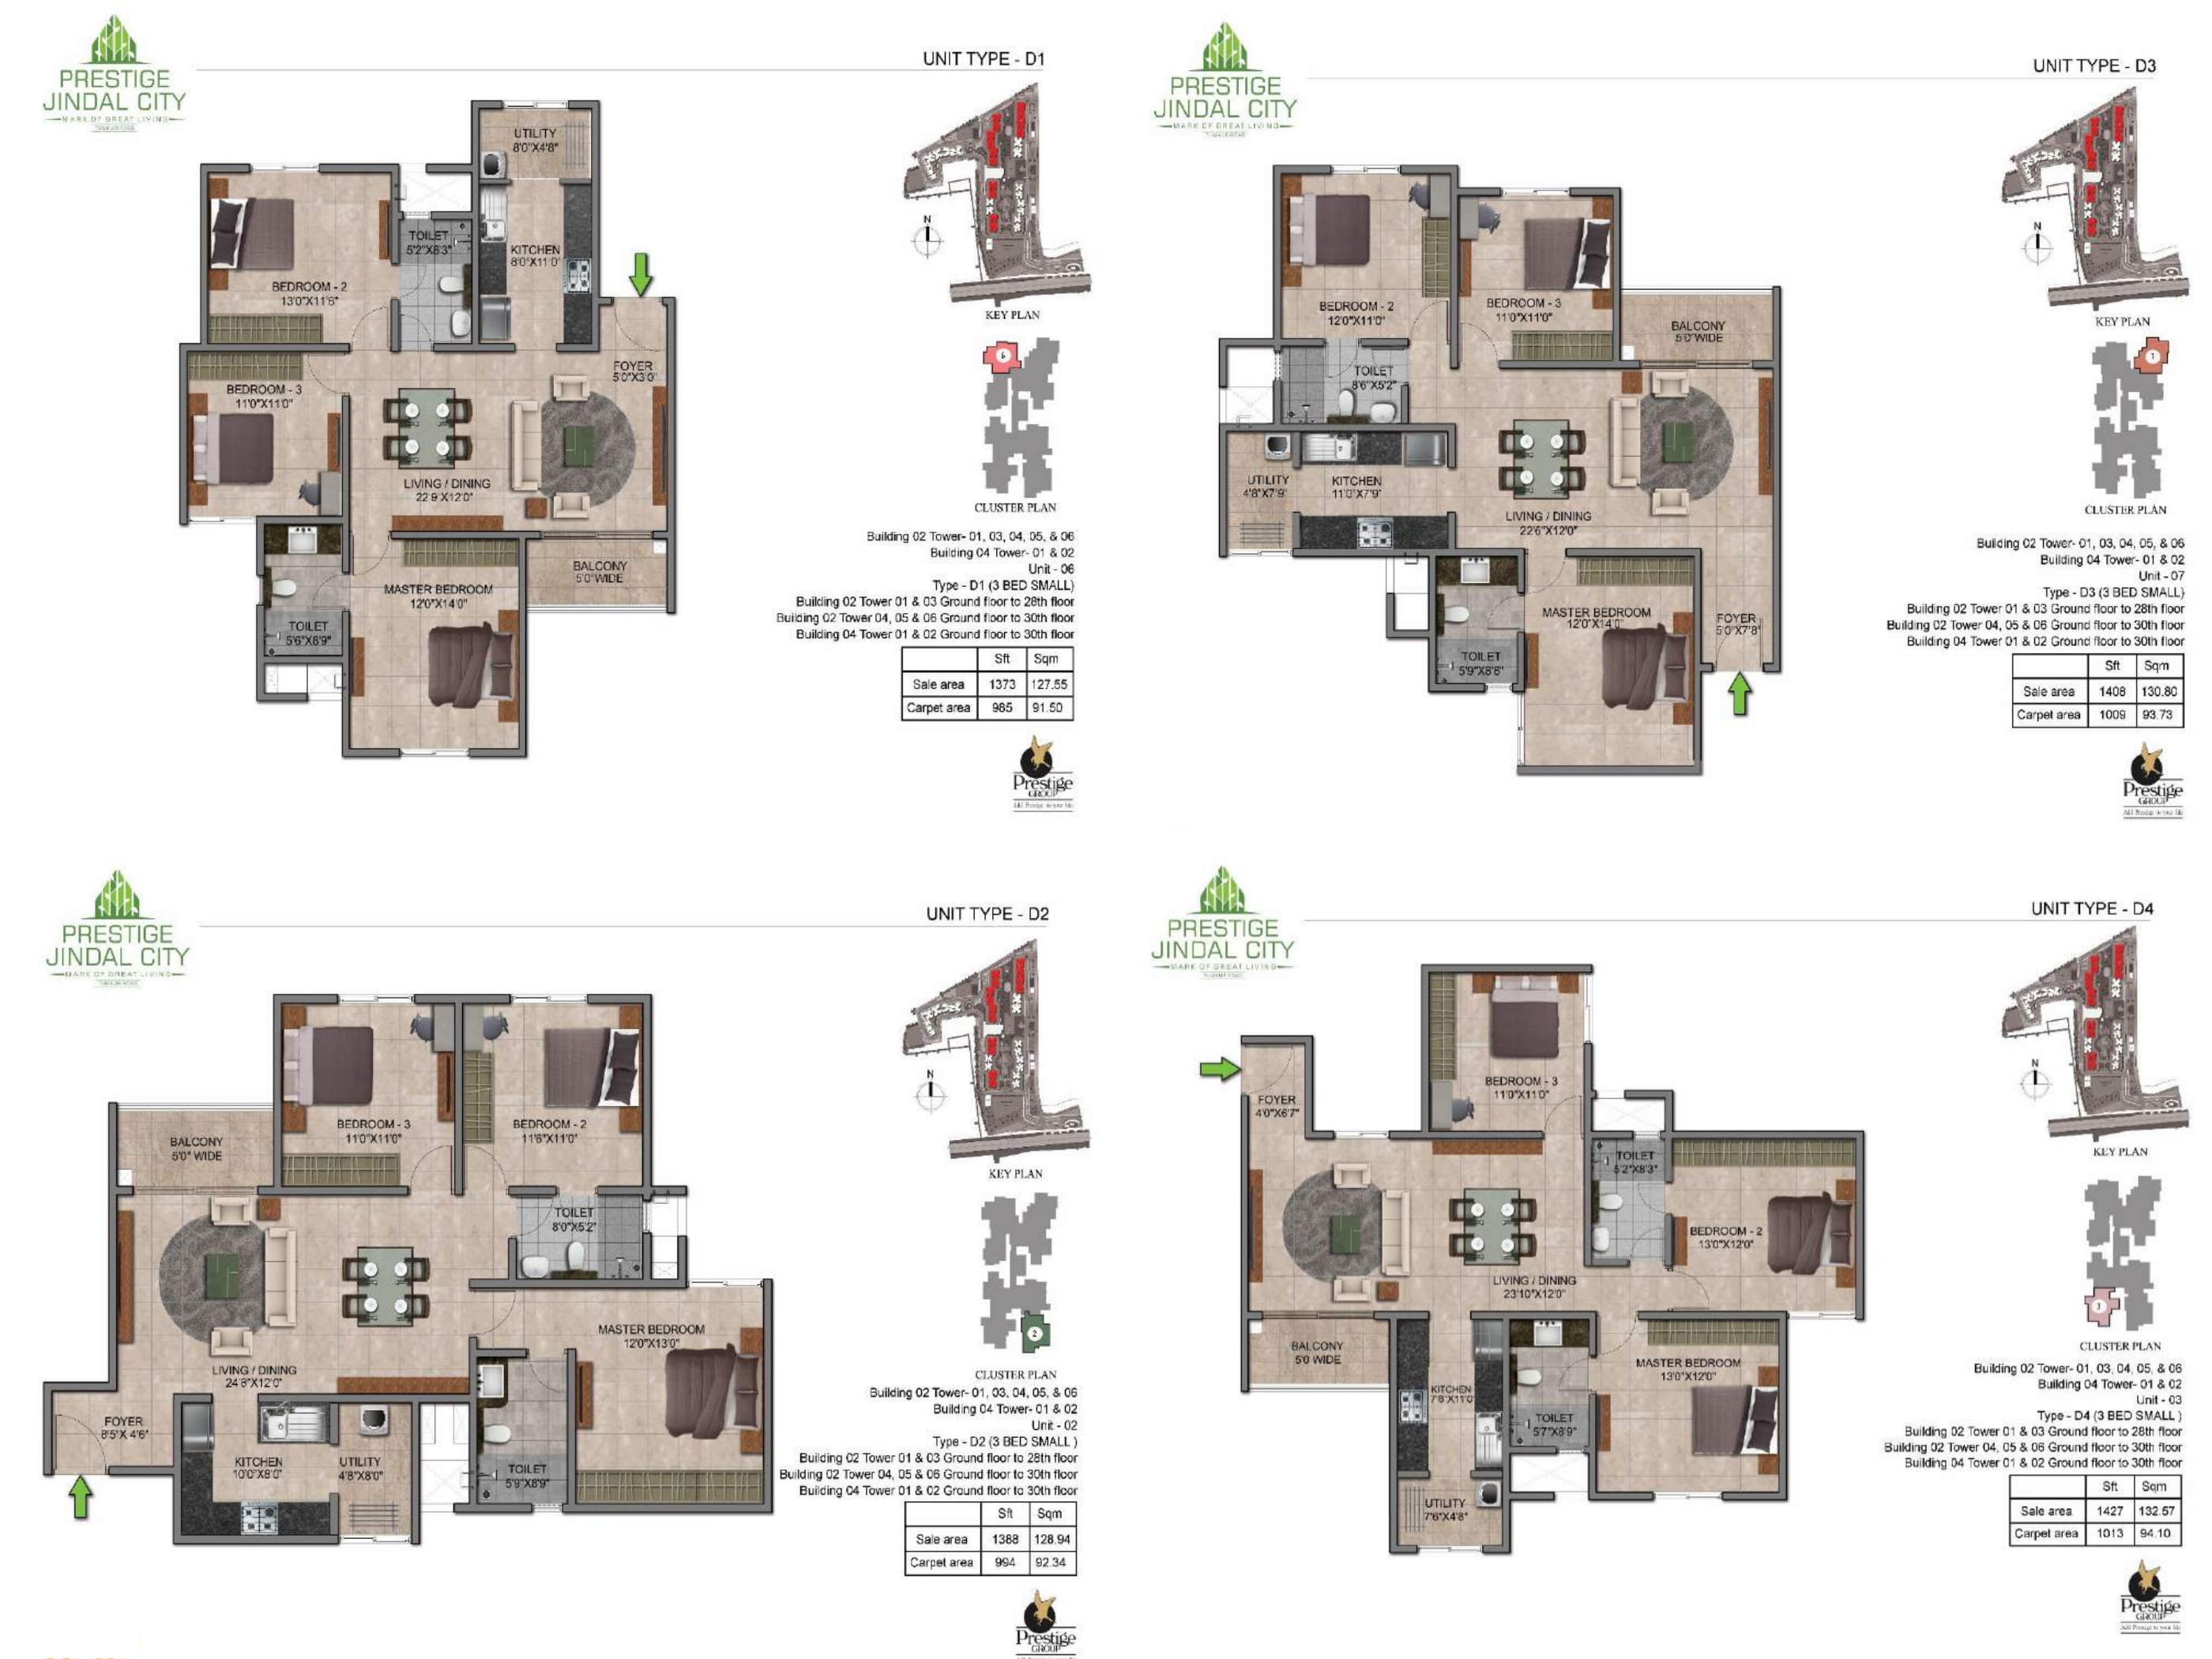 Prestige Jindal City Floor Plan Reviews